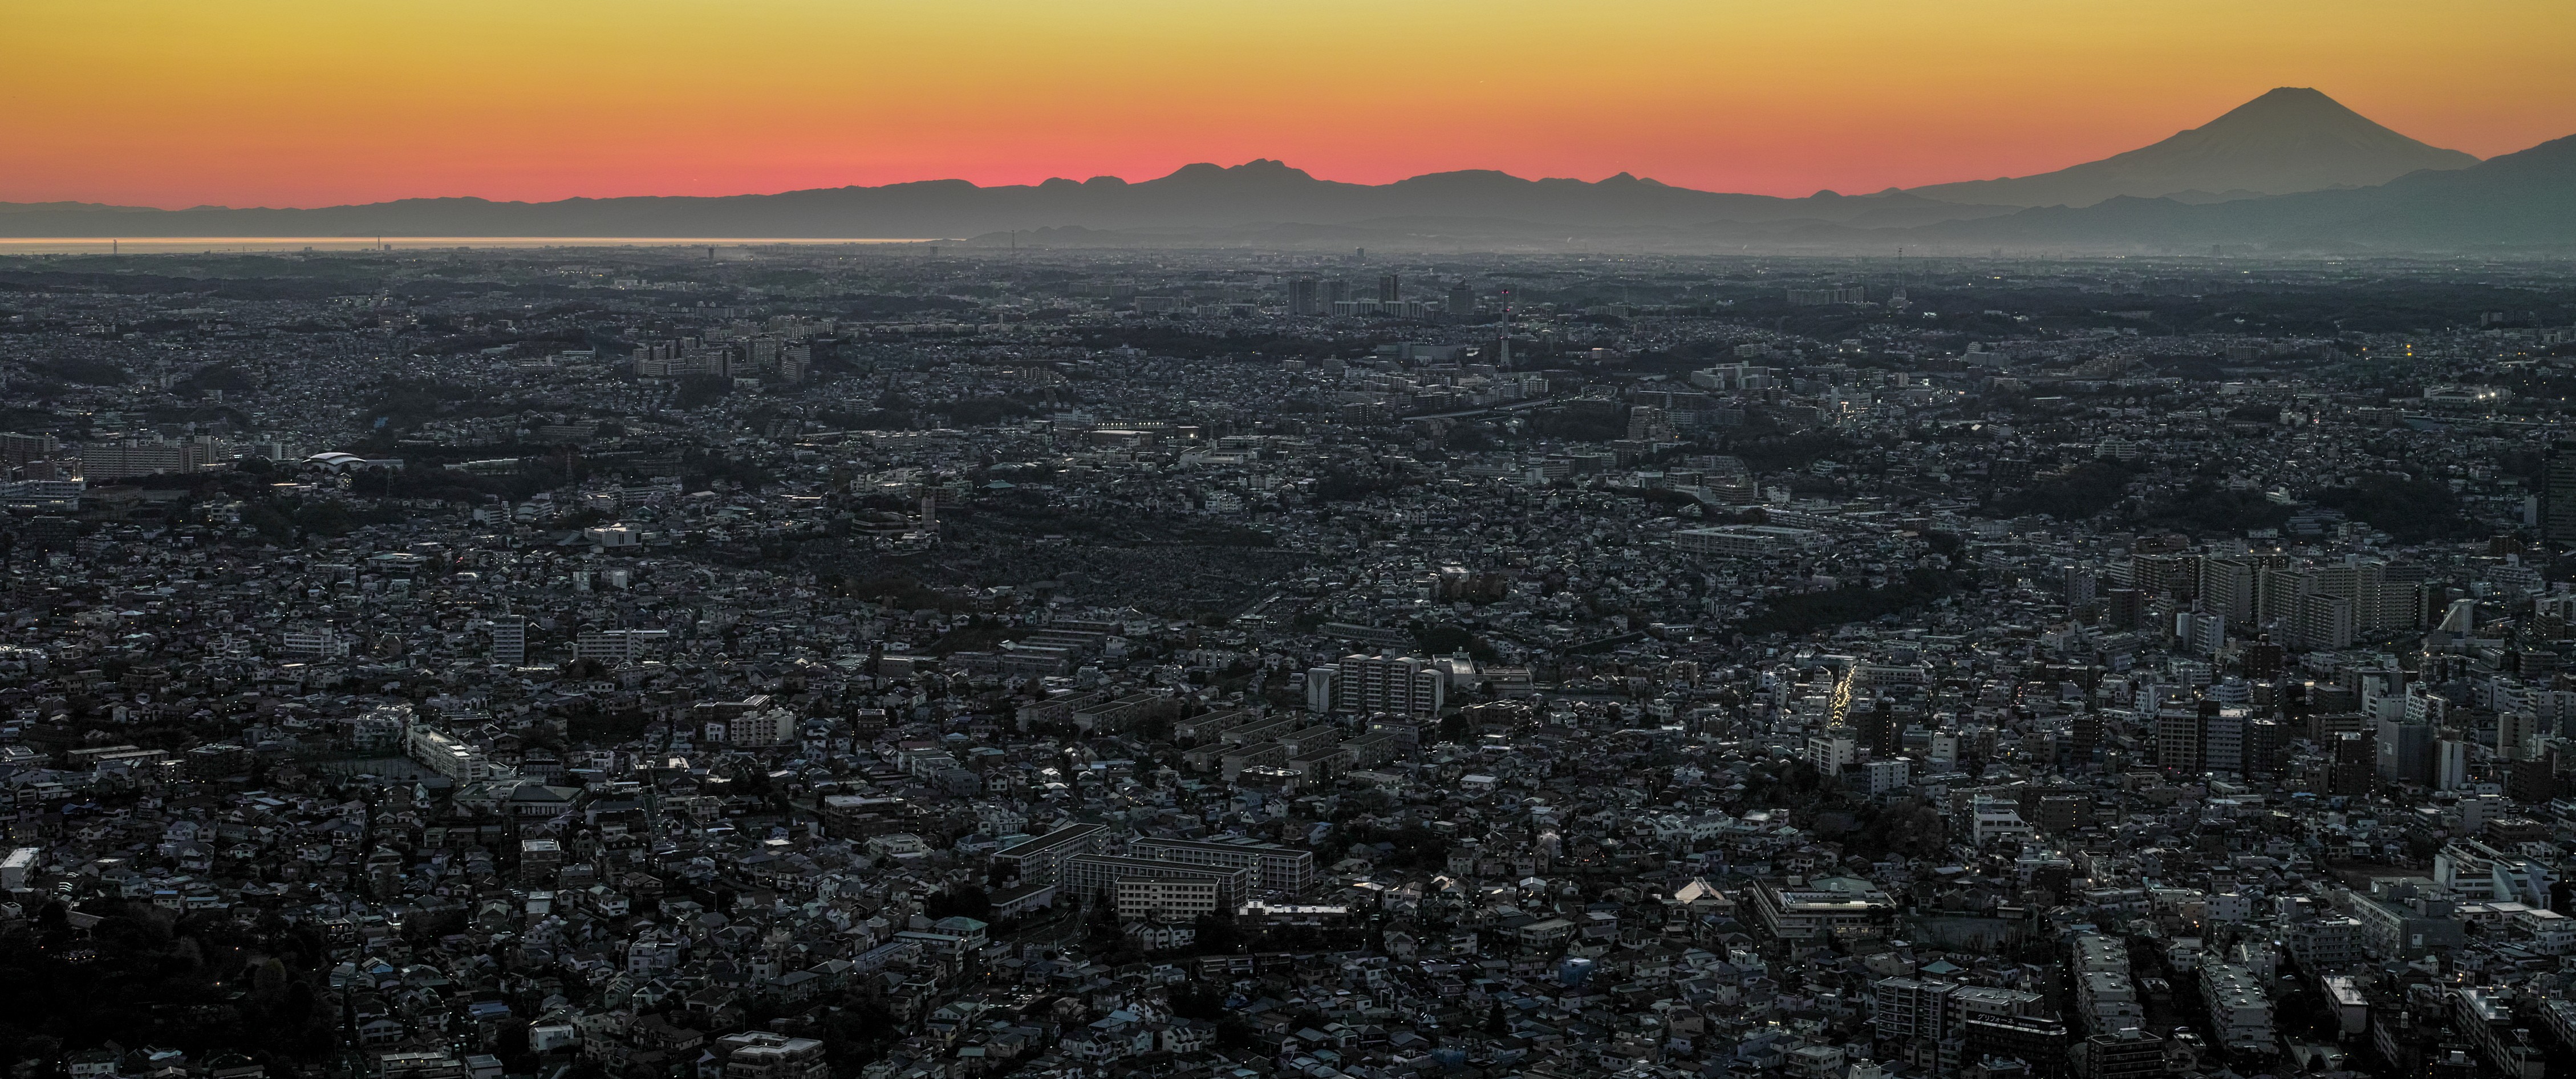 General 4517x1892 city Japan Tokyo Mount Fuji cityscape sunrise Asia orange sky